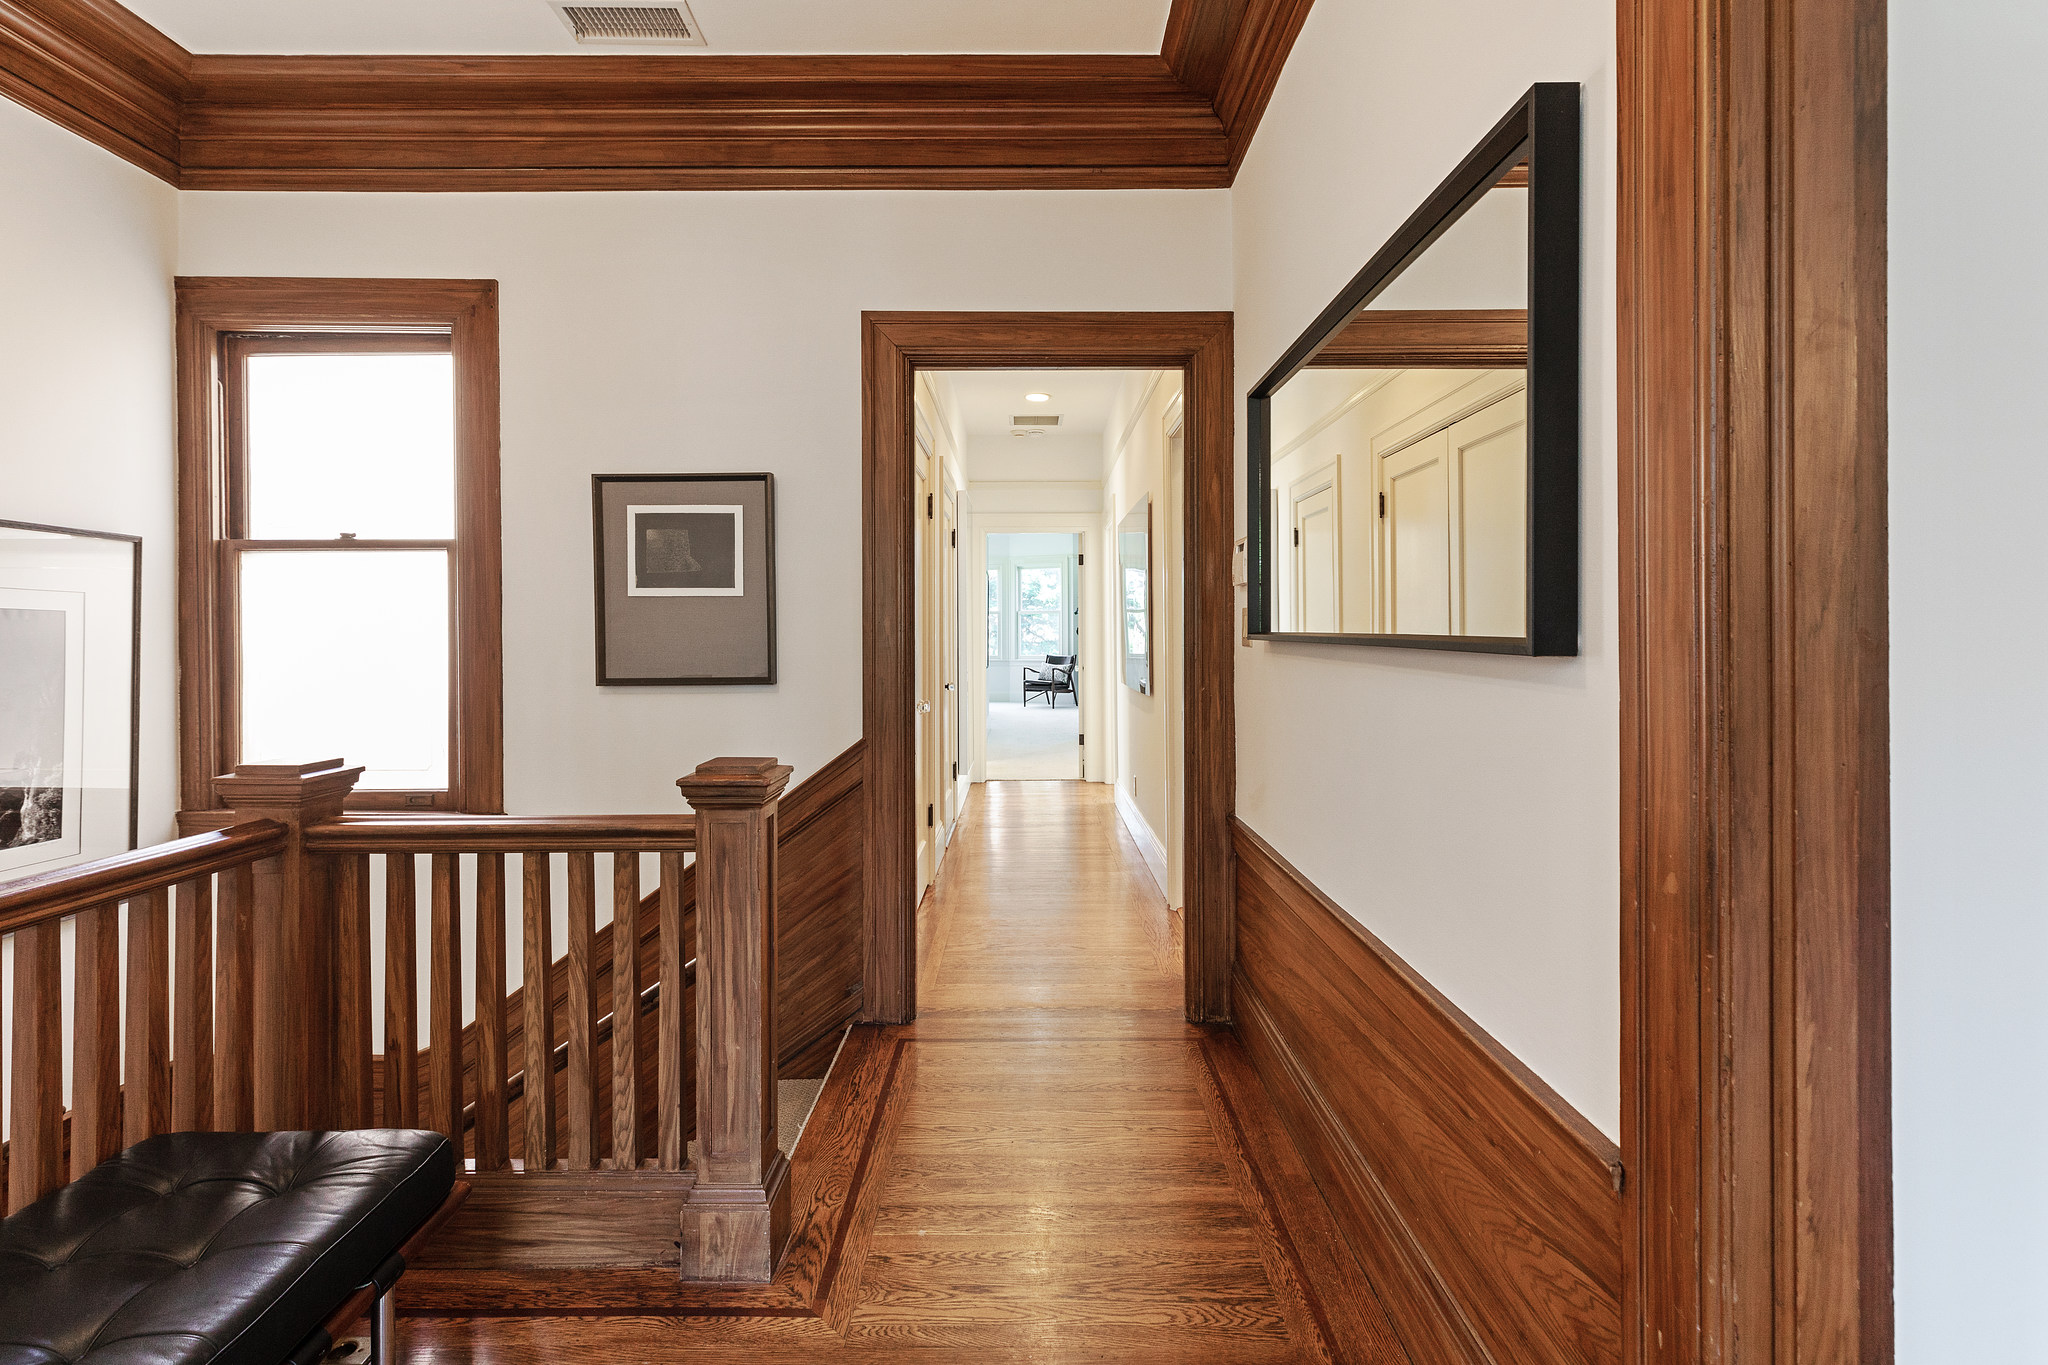 Property Photo: Hallway with wood floors